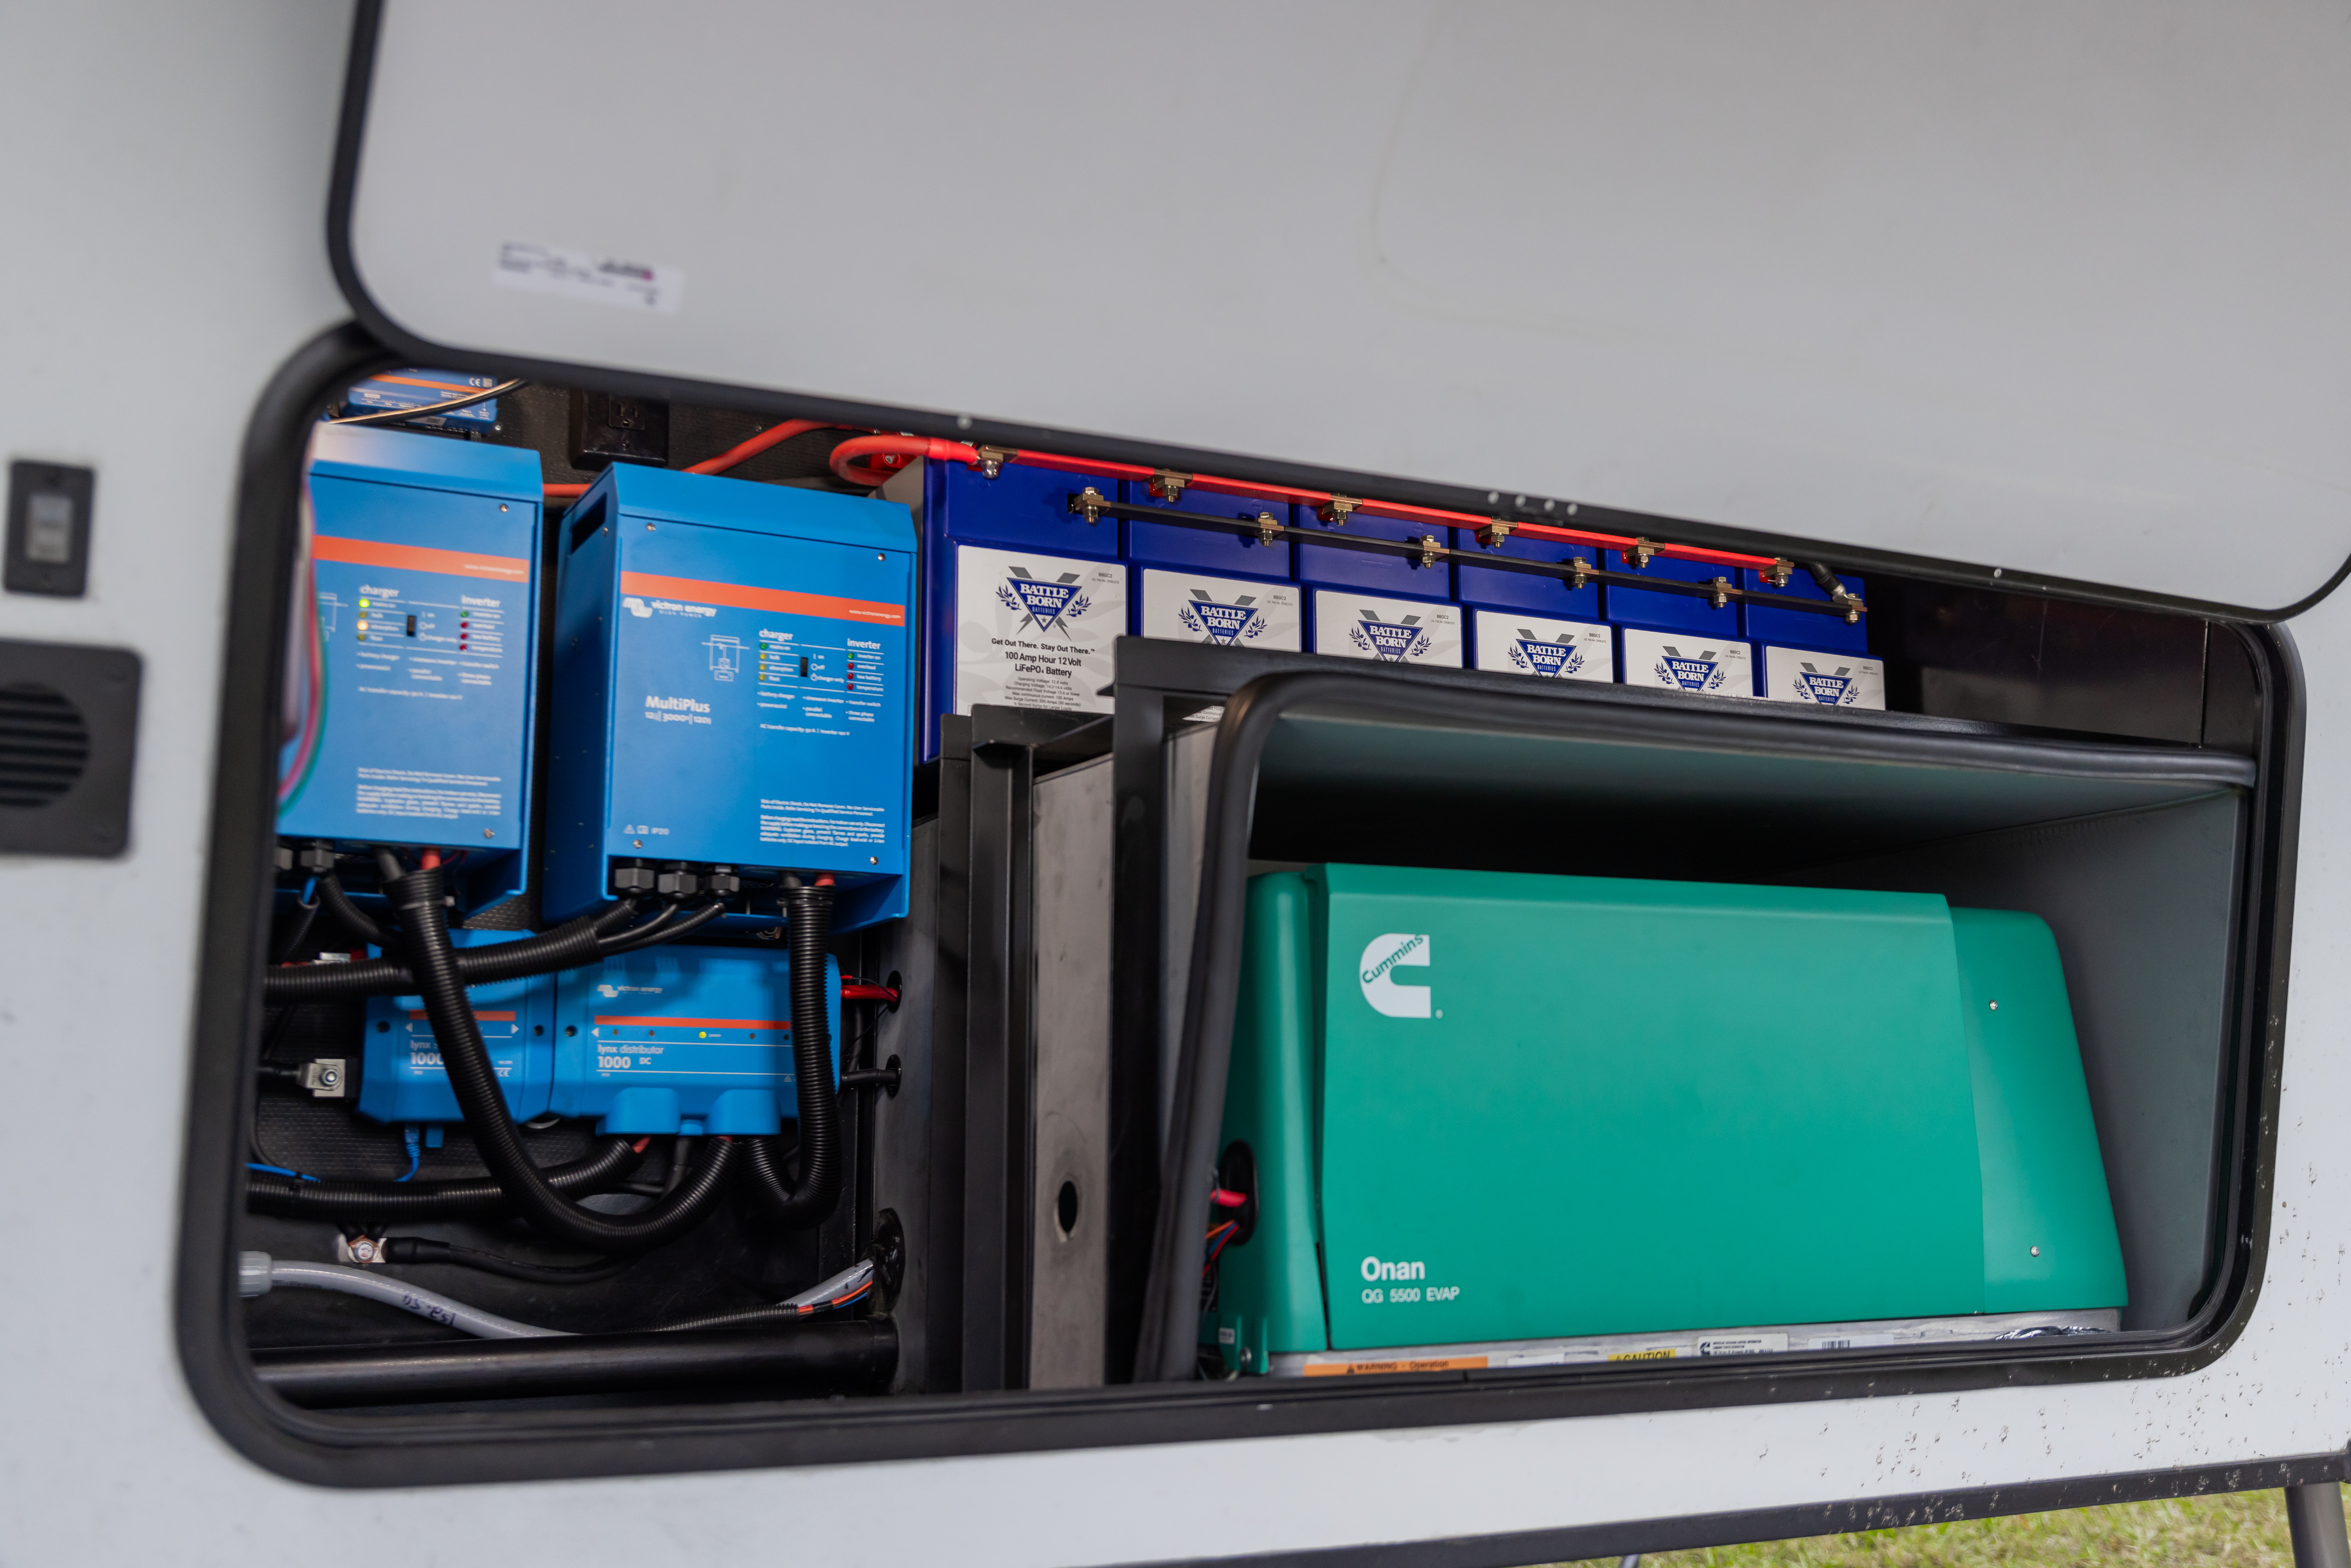 Battle Born Batteries RV power system with an Onan generator